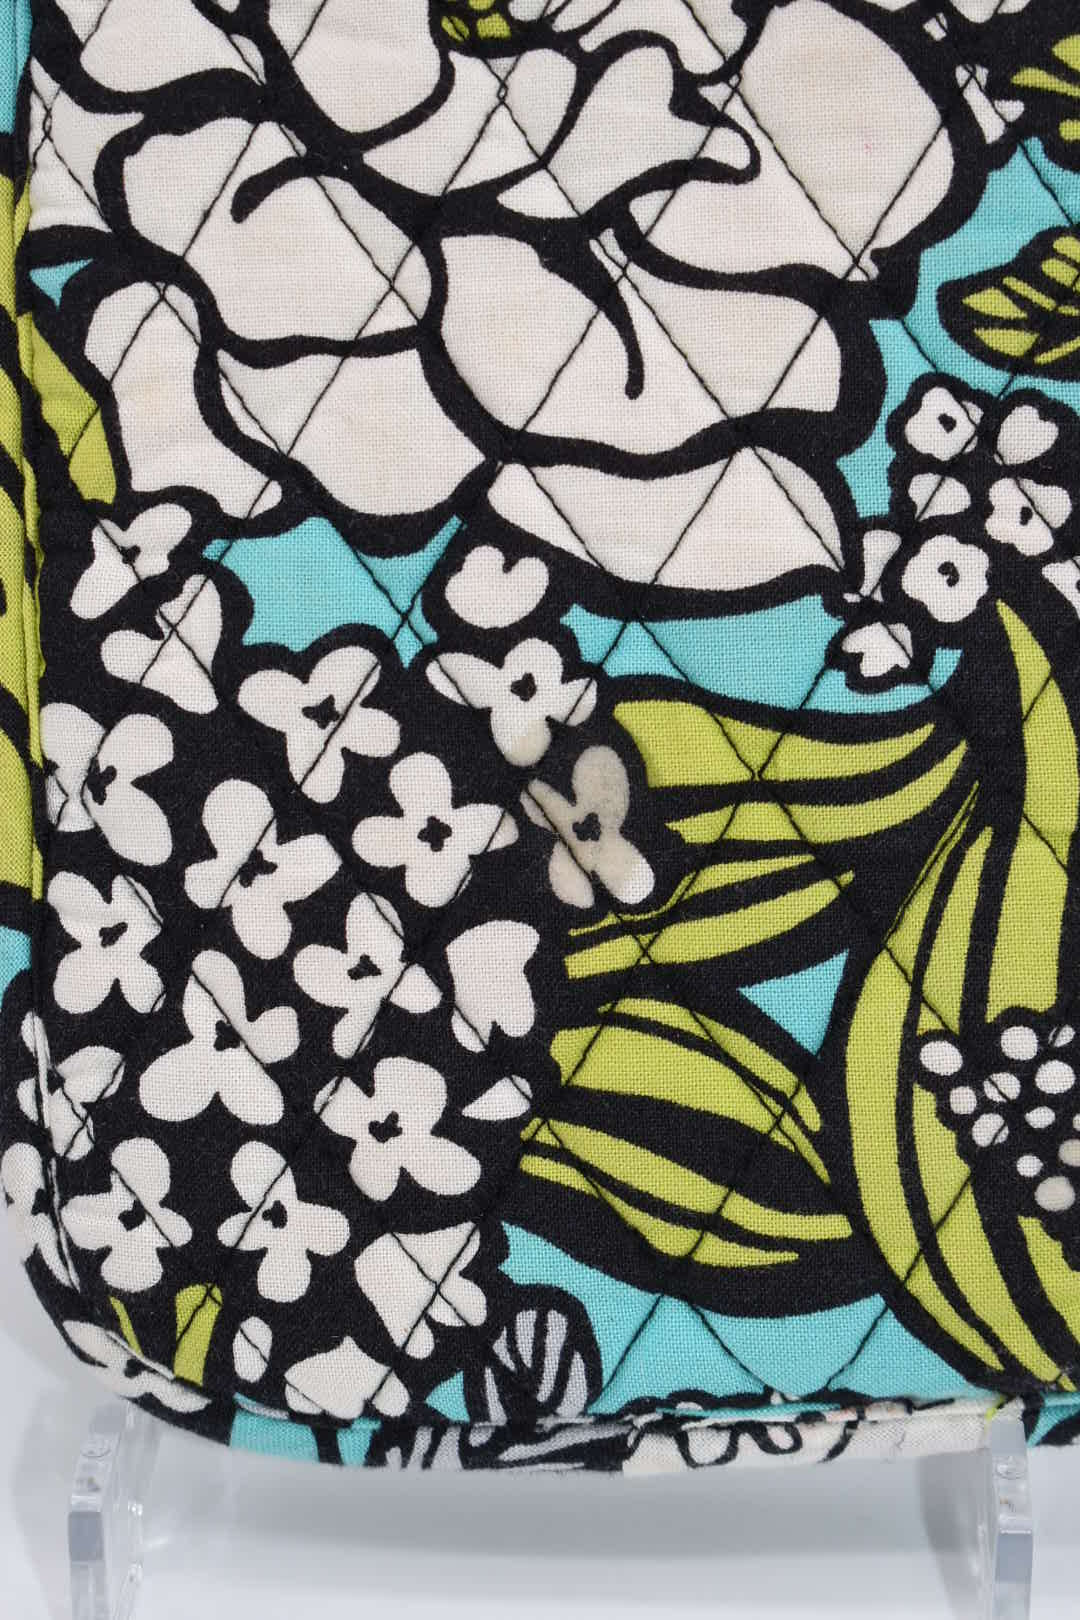 Vera Bradley Curling & Flat Iron Cover in "Island Blooms" Pattern